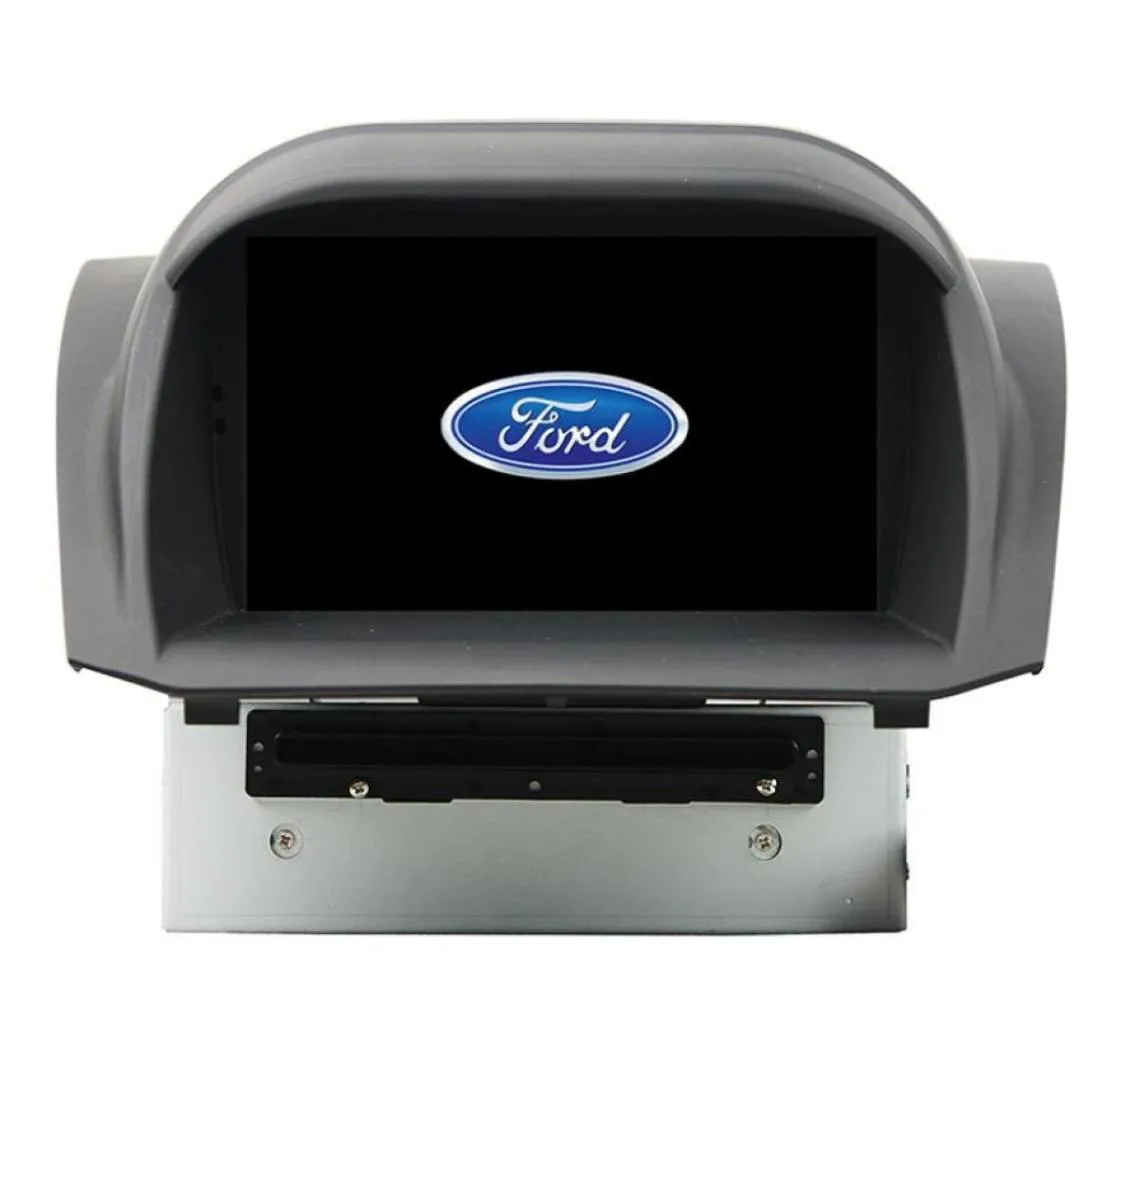 CAR DVD Player dla Forda Fiesta 4GB RAM 32 GB ROM Octacore 7 -calowy Andriod 80 z GPSsteering Wheel ControlbluetoothRadio8424428